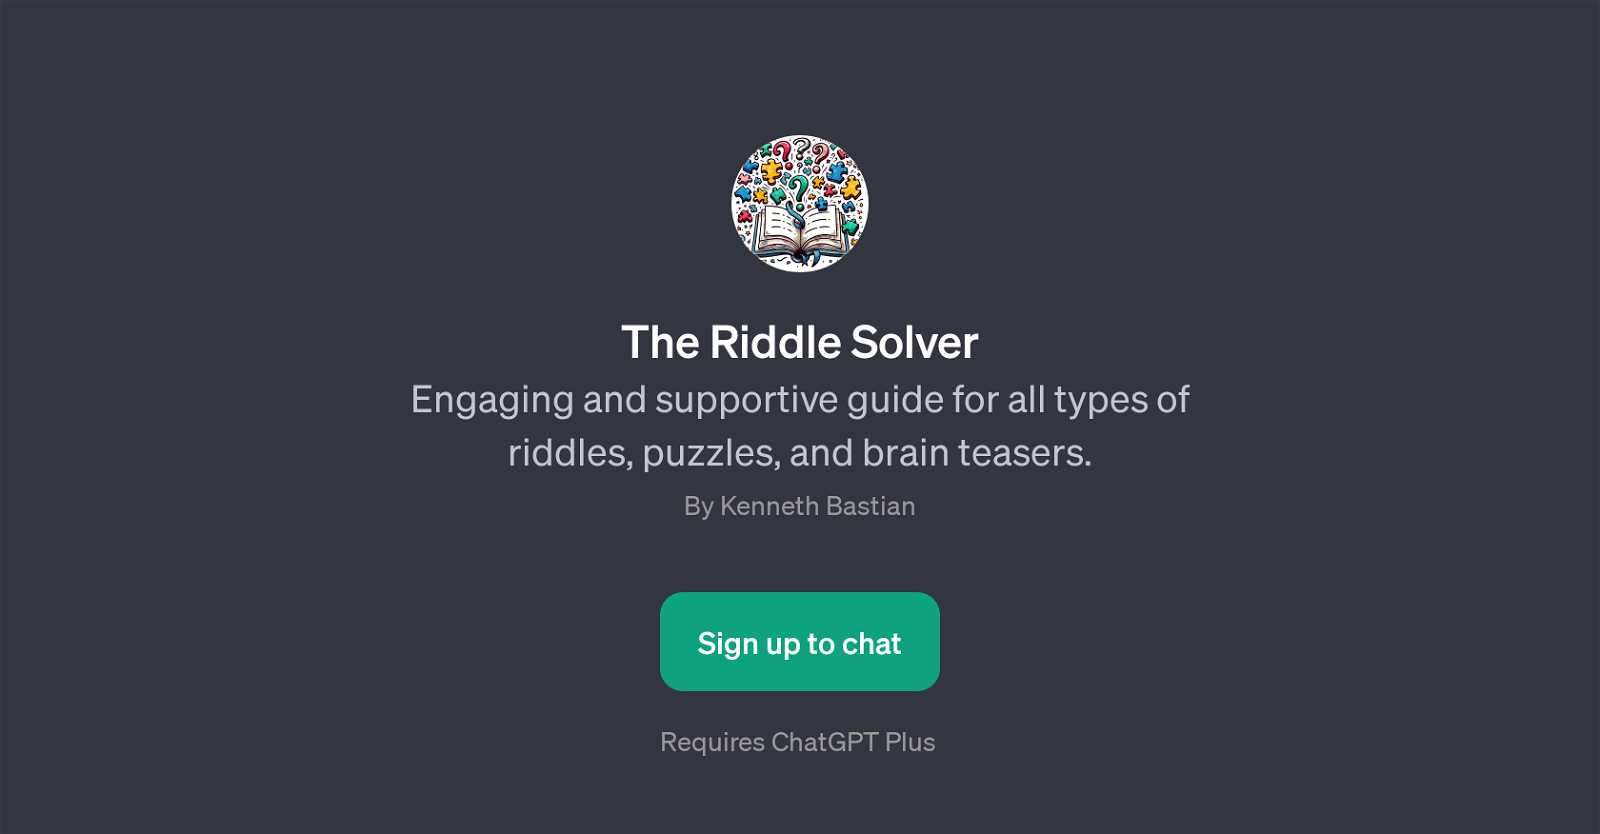 The Riddle Solver website